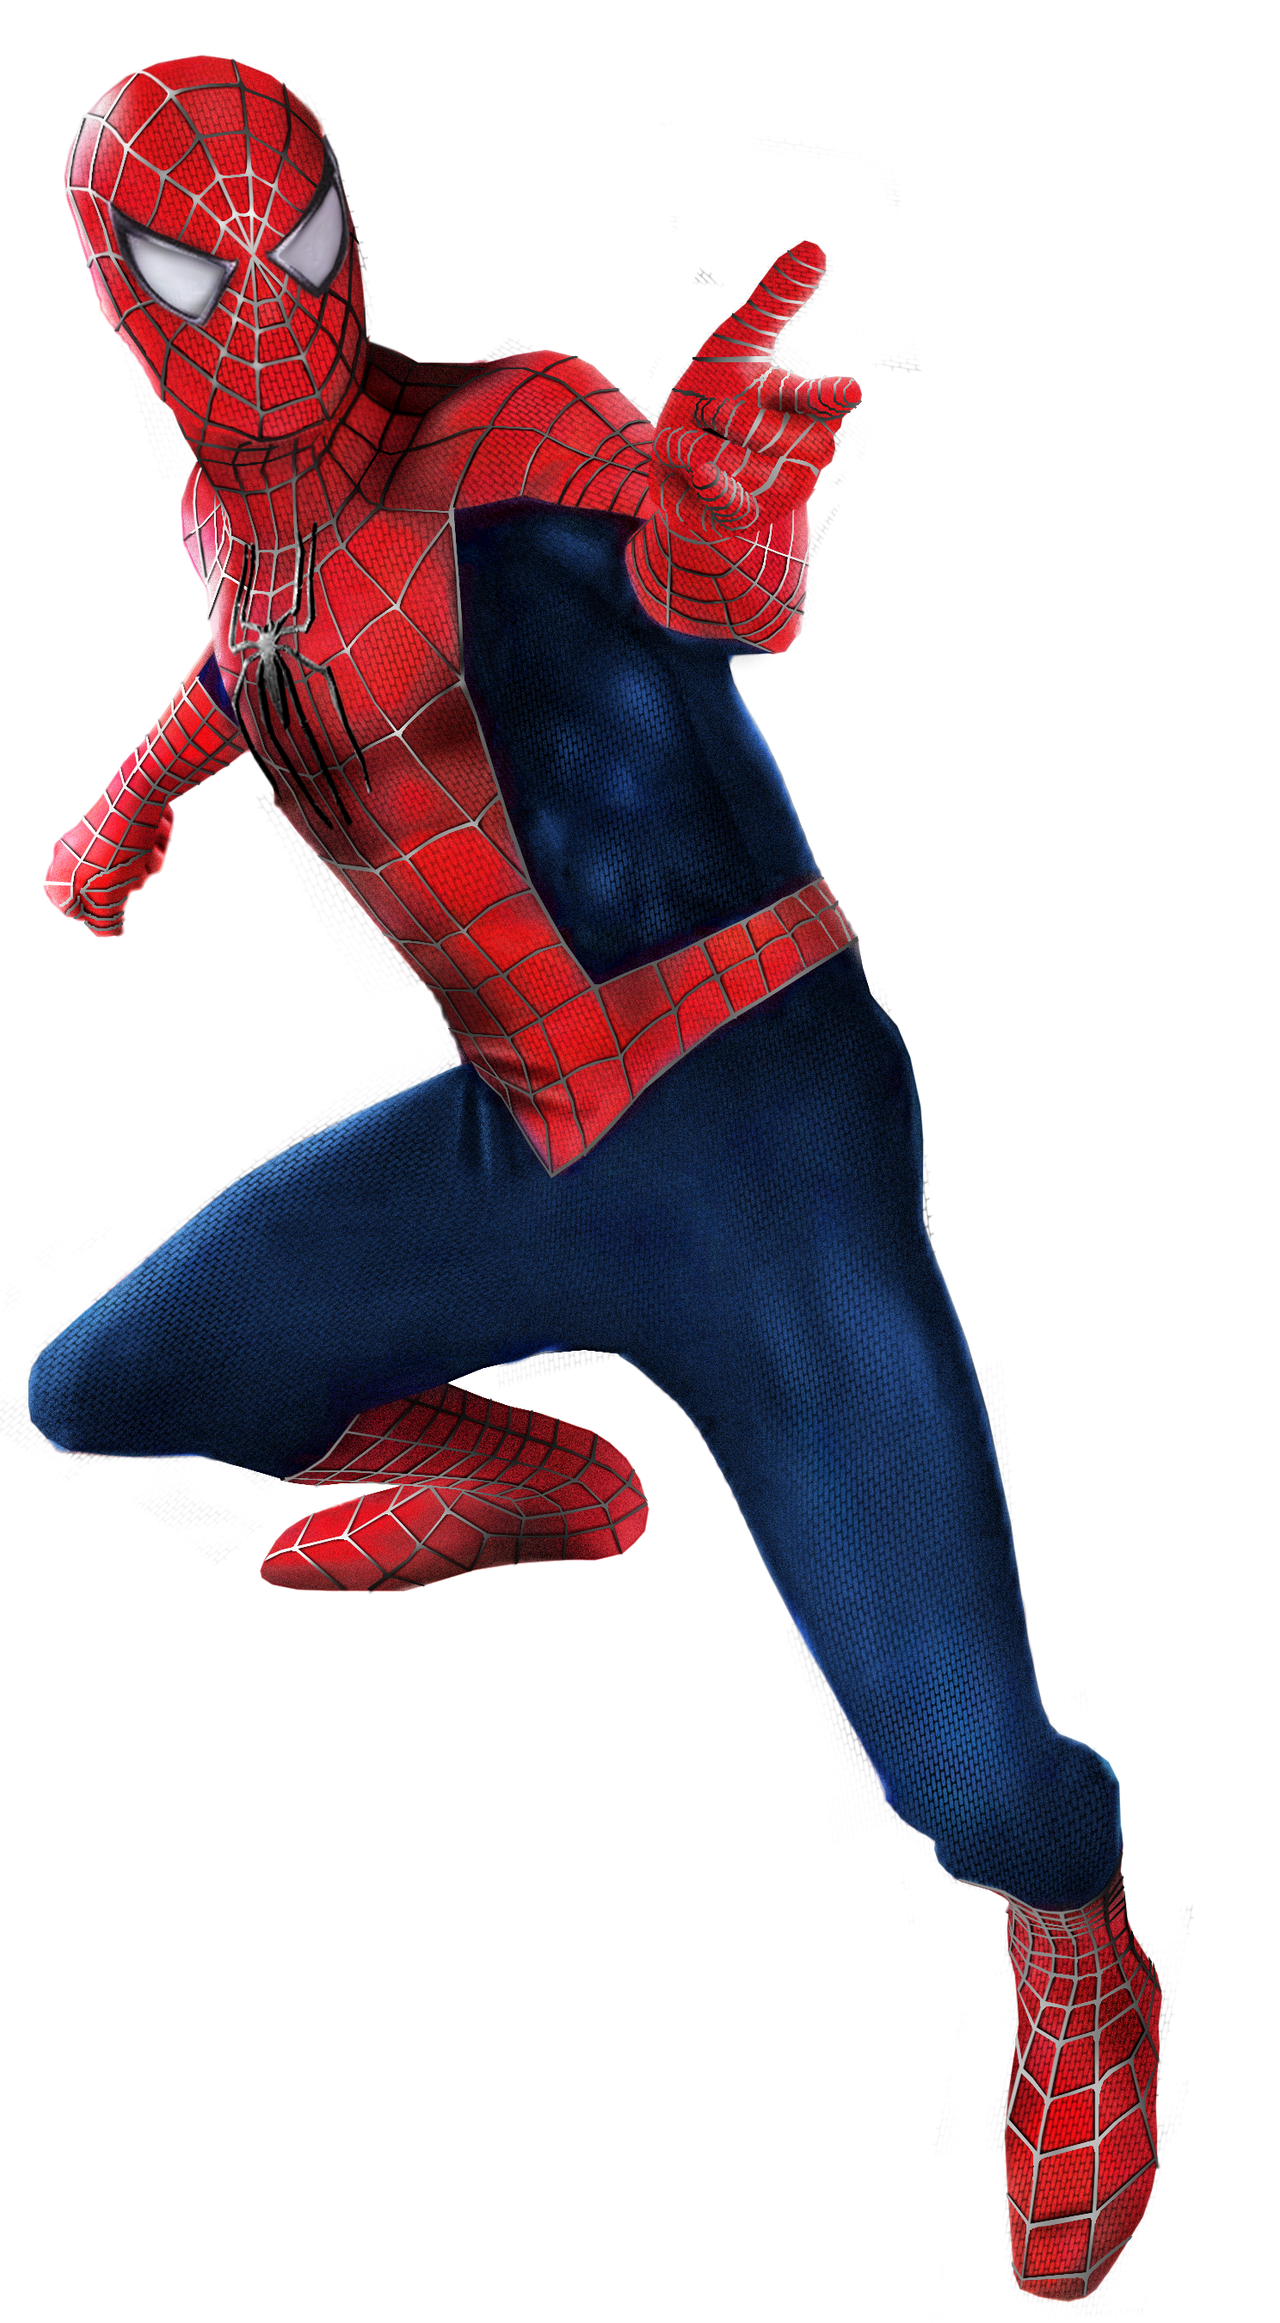 Spider-man 2 Tobey Maguire Png by Gabrielrock24 on DeviantArt